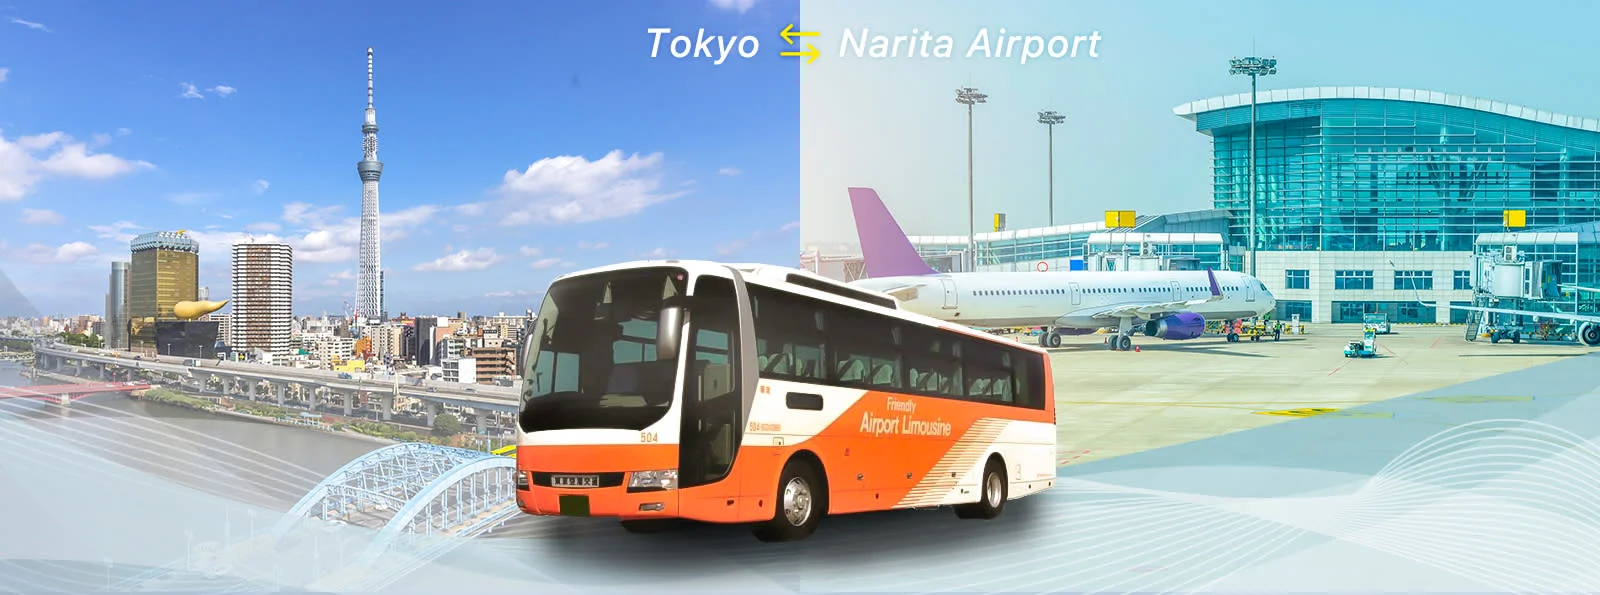 Narita Airport Limousine Bus Ticket for Tokyo